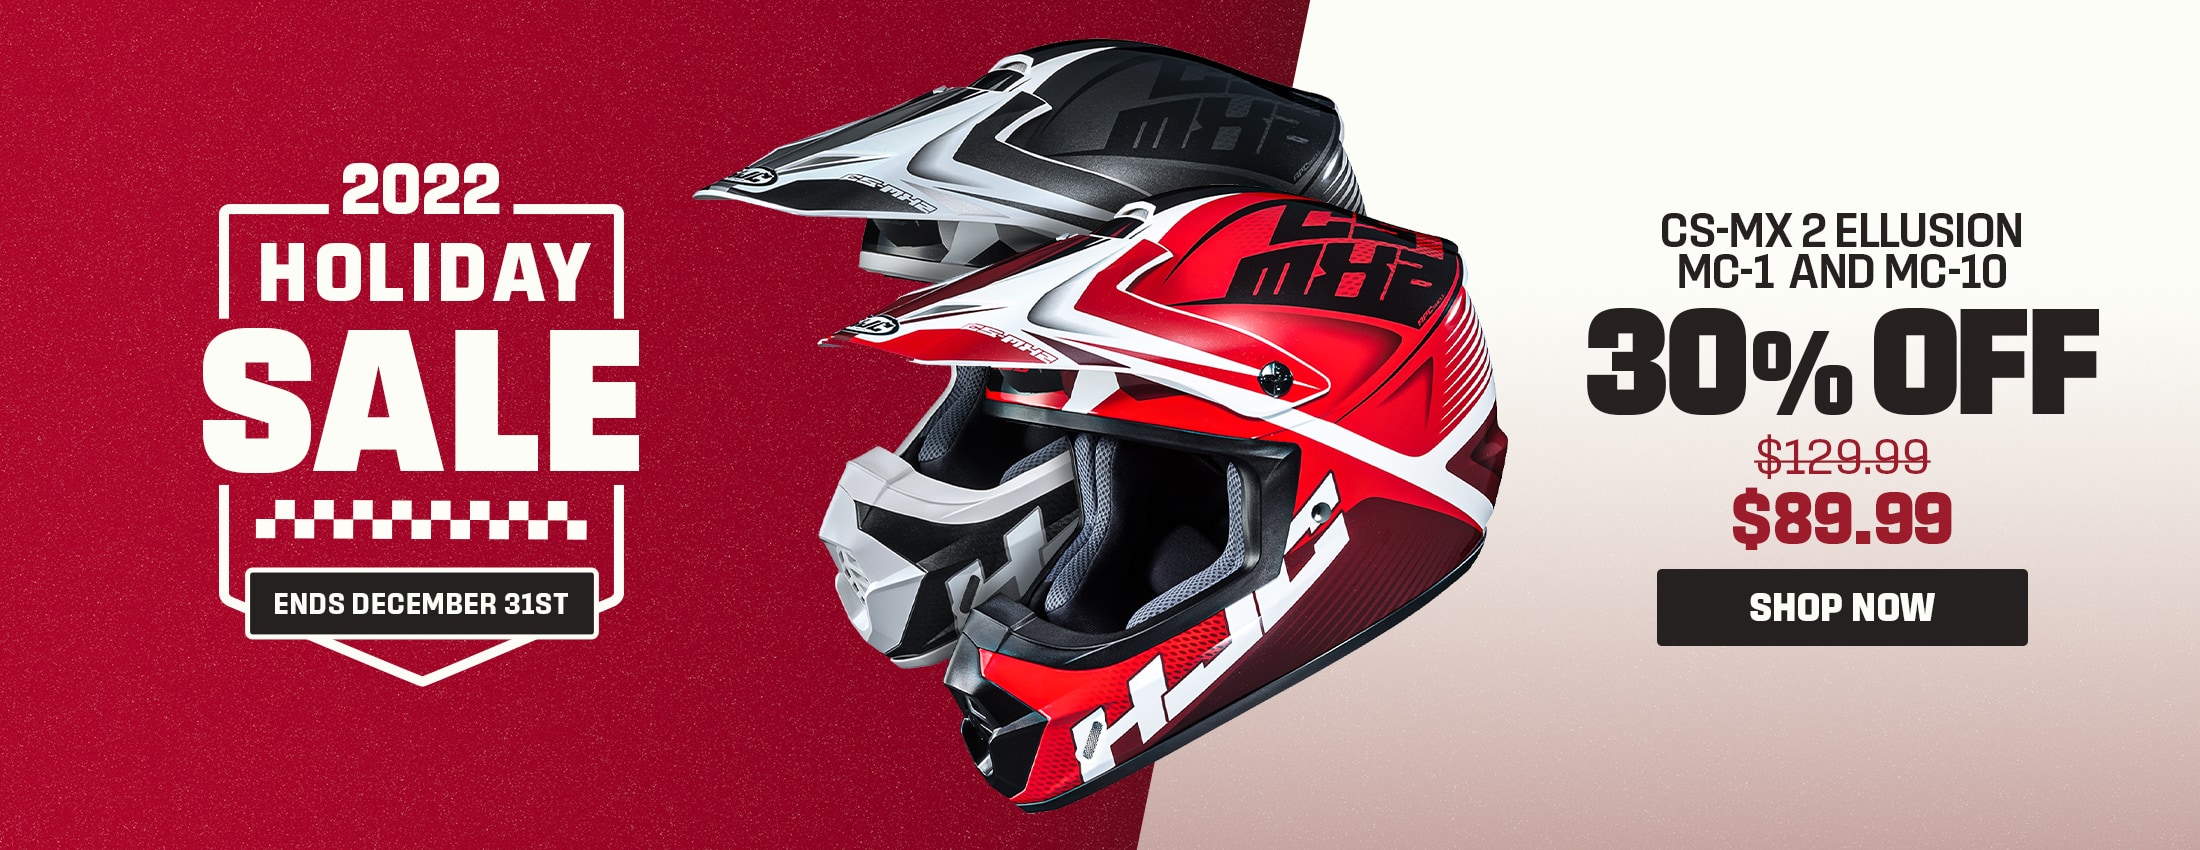 HJC Helmets 2022 Holiday Sale